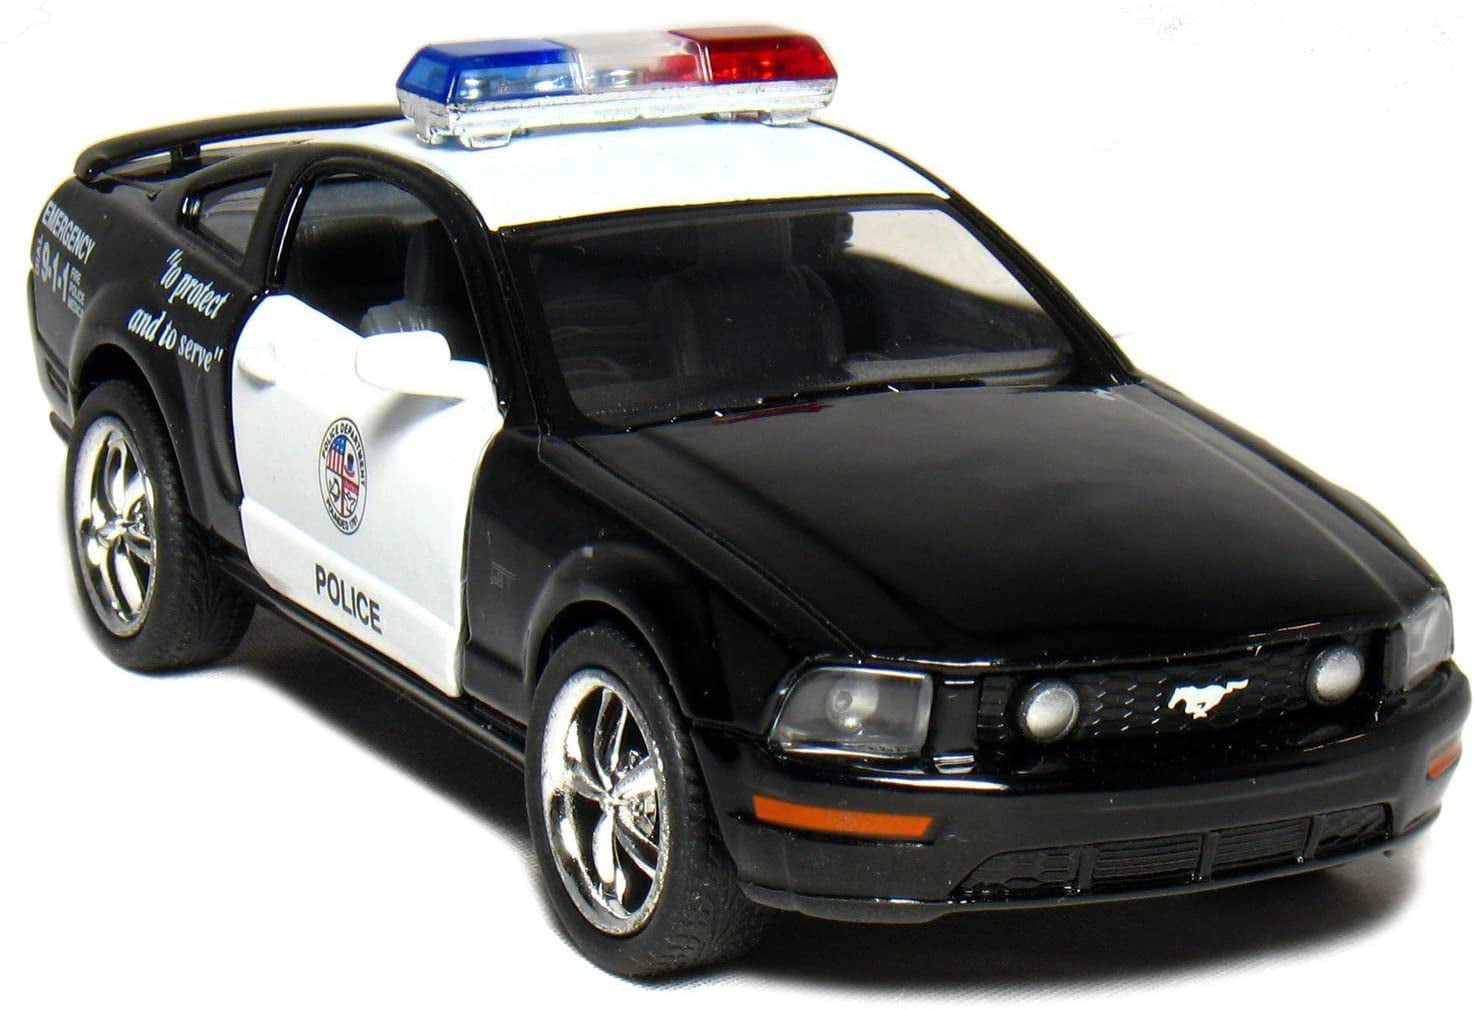 2006 Ford Mustang GT Police 5" Diecast 1:38 Pull Back Kinsmart Toy Black/White 